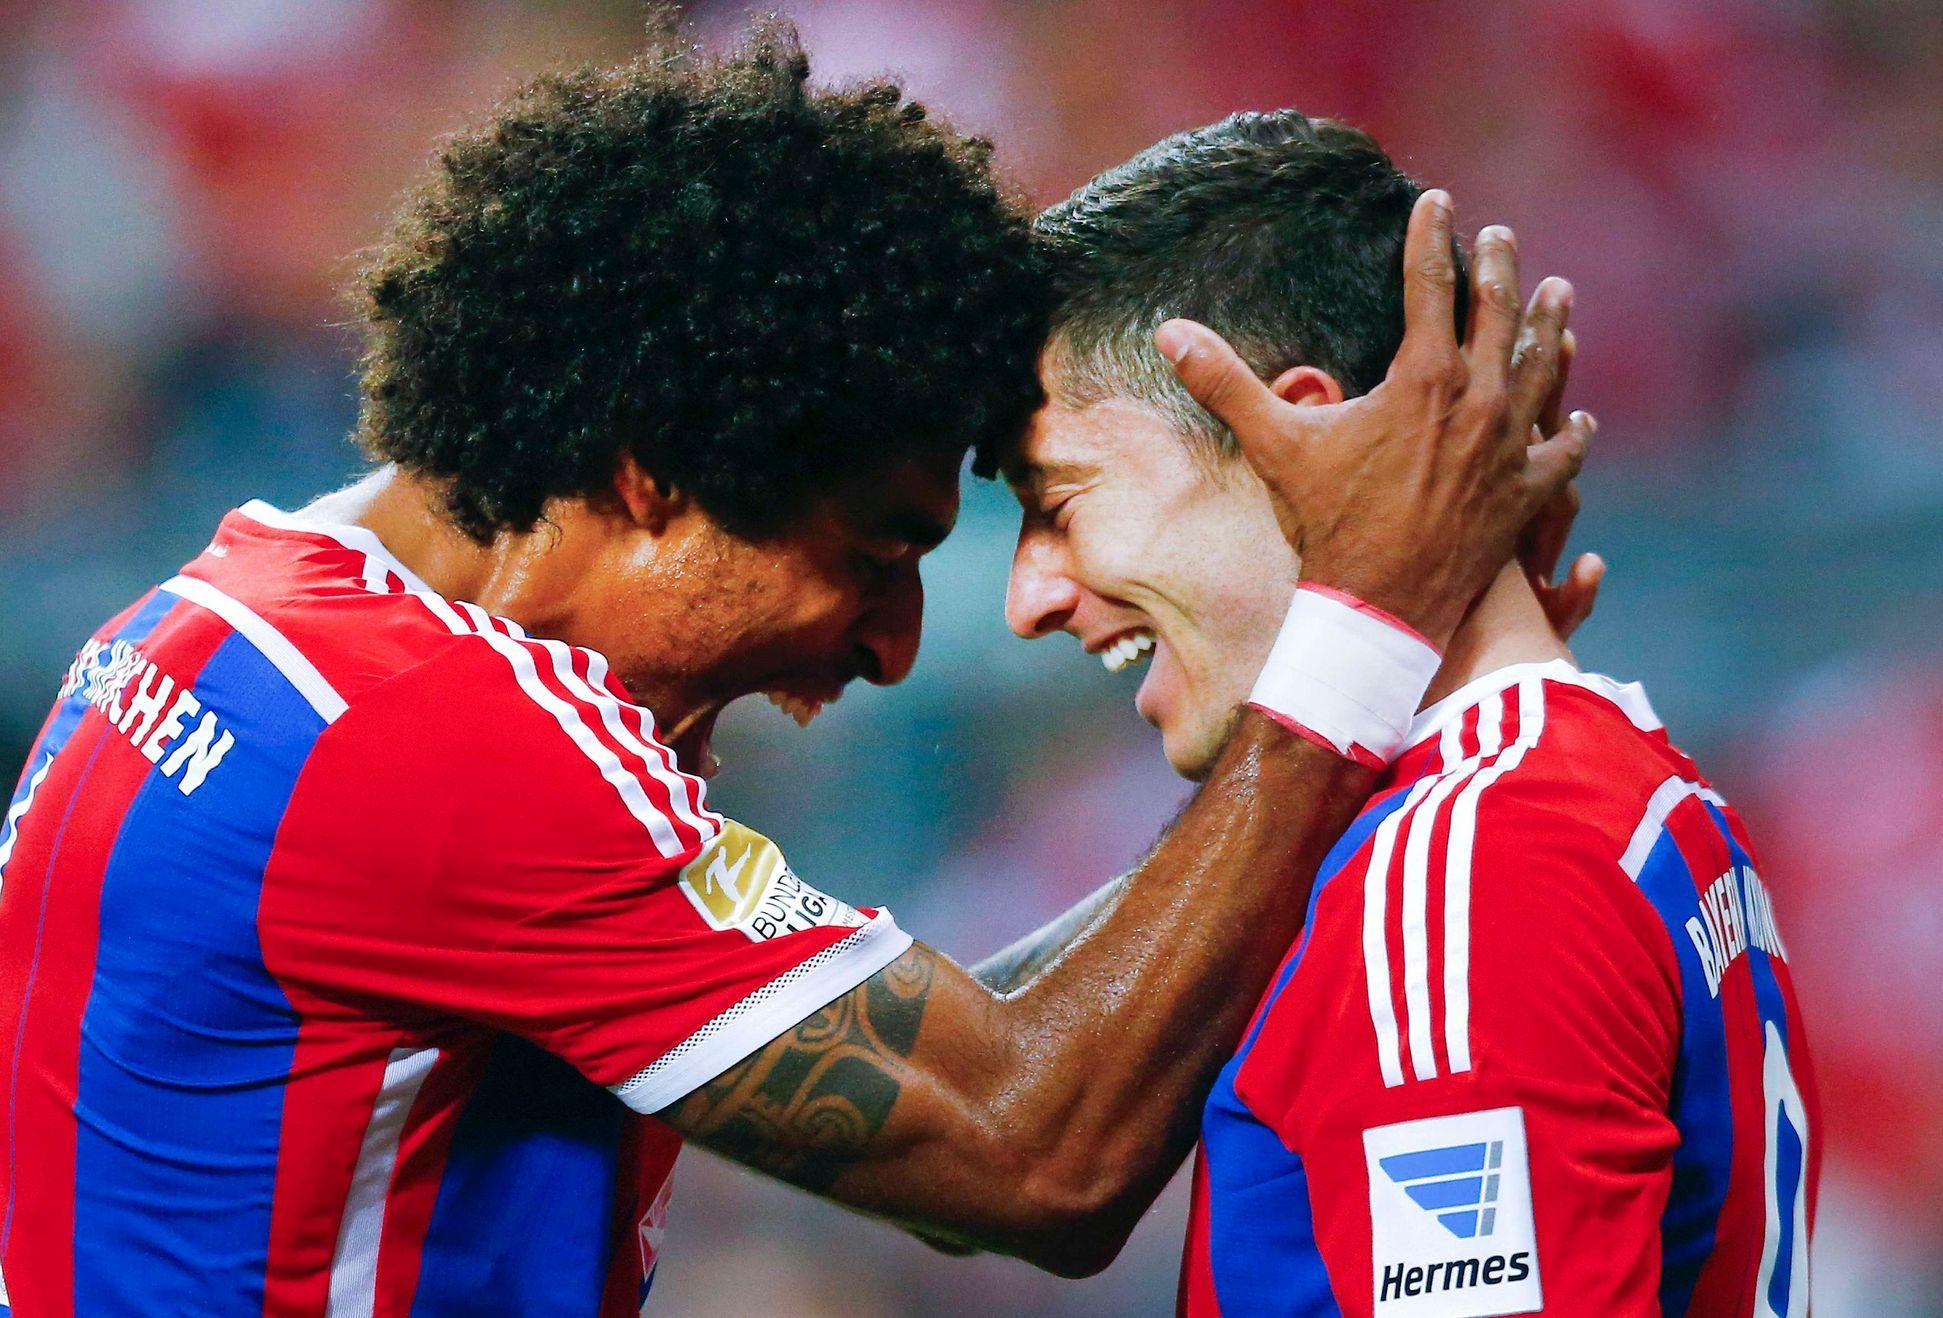 Bayern Munich's Lewandowski and Dante celebrate a goal against Paderborn during their German first division Bundesliga soccer match in Munich